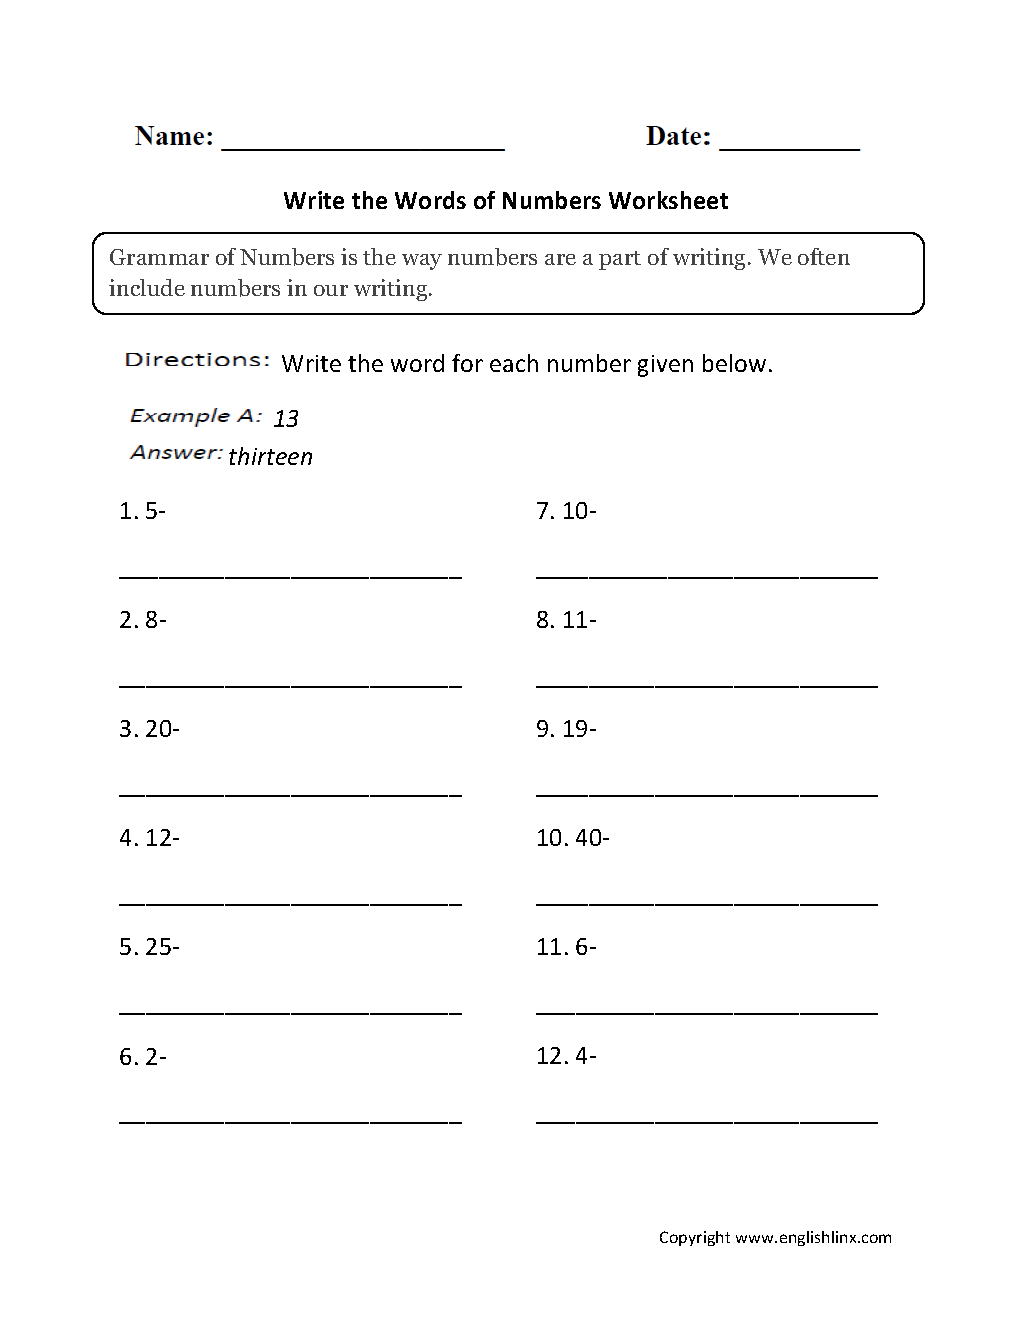 grammar mechanics worksheets grammar of numbers worksheets